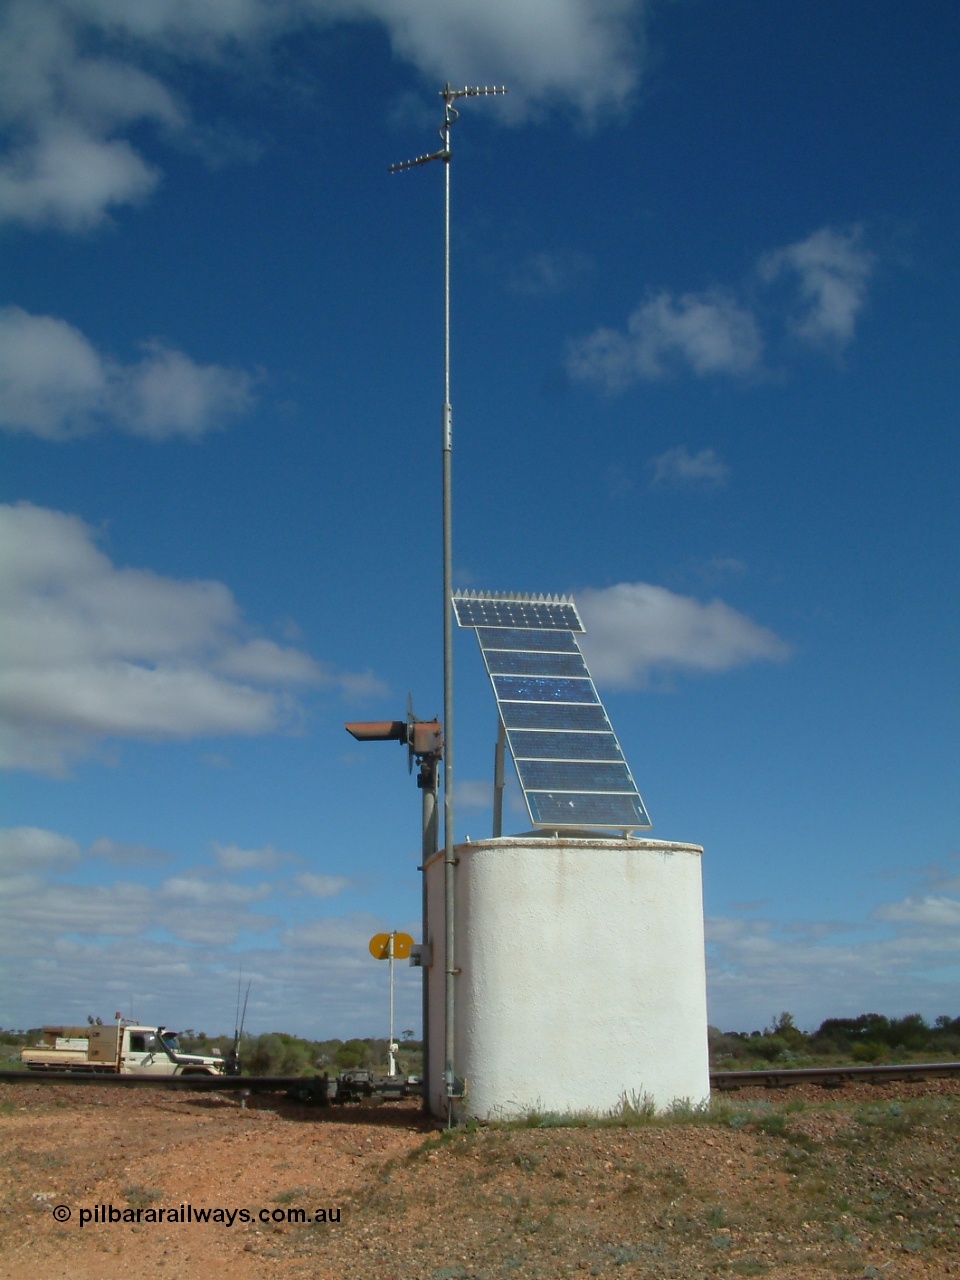 030415 135257
Kingoonya, located at the 426.5 km on the Trans Australian Railway, interlocking hut with solar panel, searchlight signal and local indicator. Eastern end looking south. [url=https://goo.gl/maps/7TMcikXj33EqWvyCA]GeoData location[/url].
